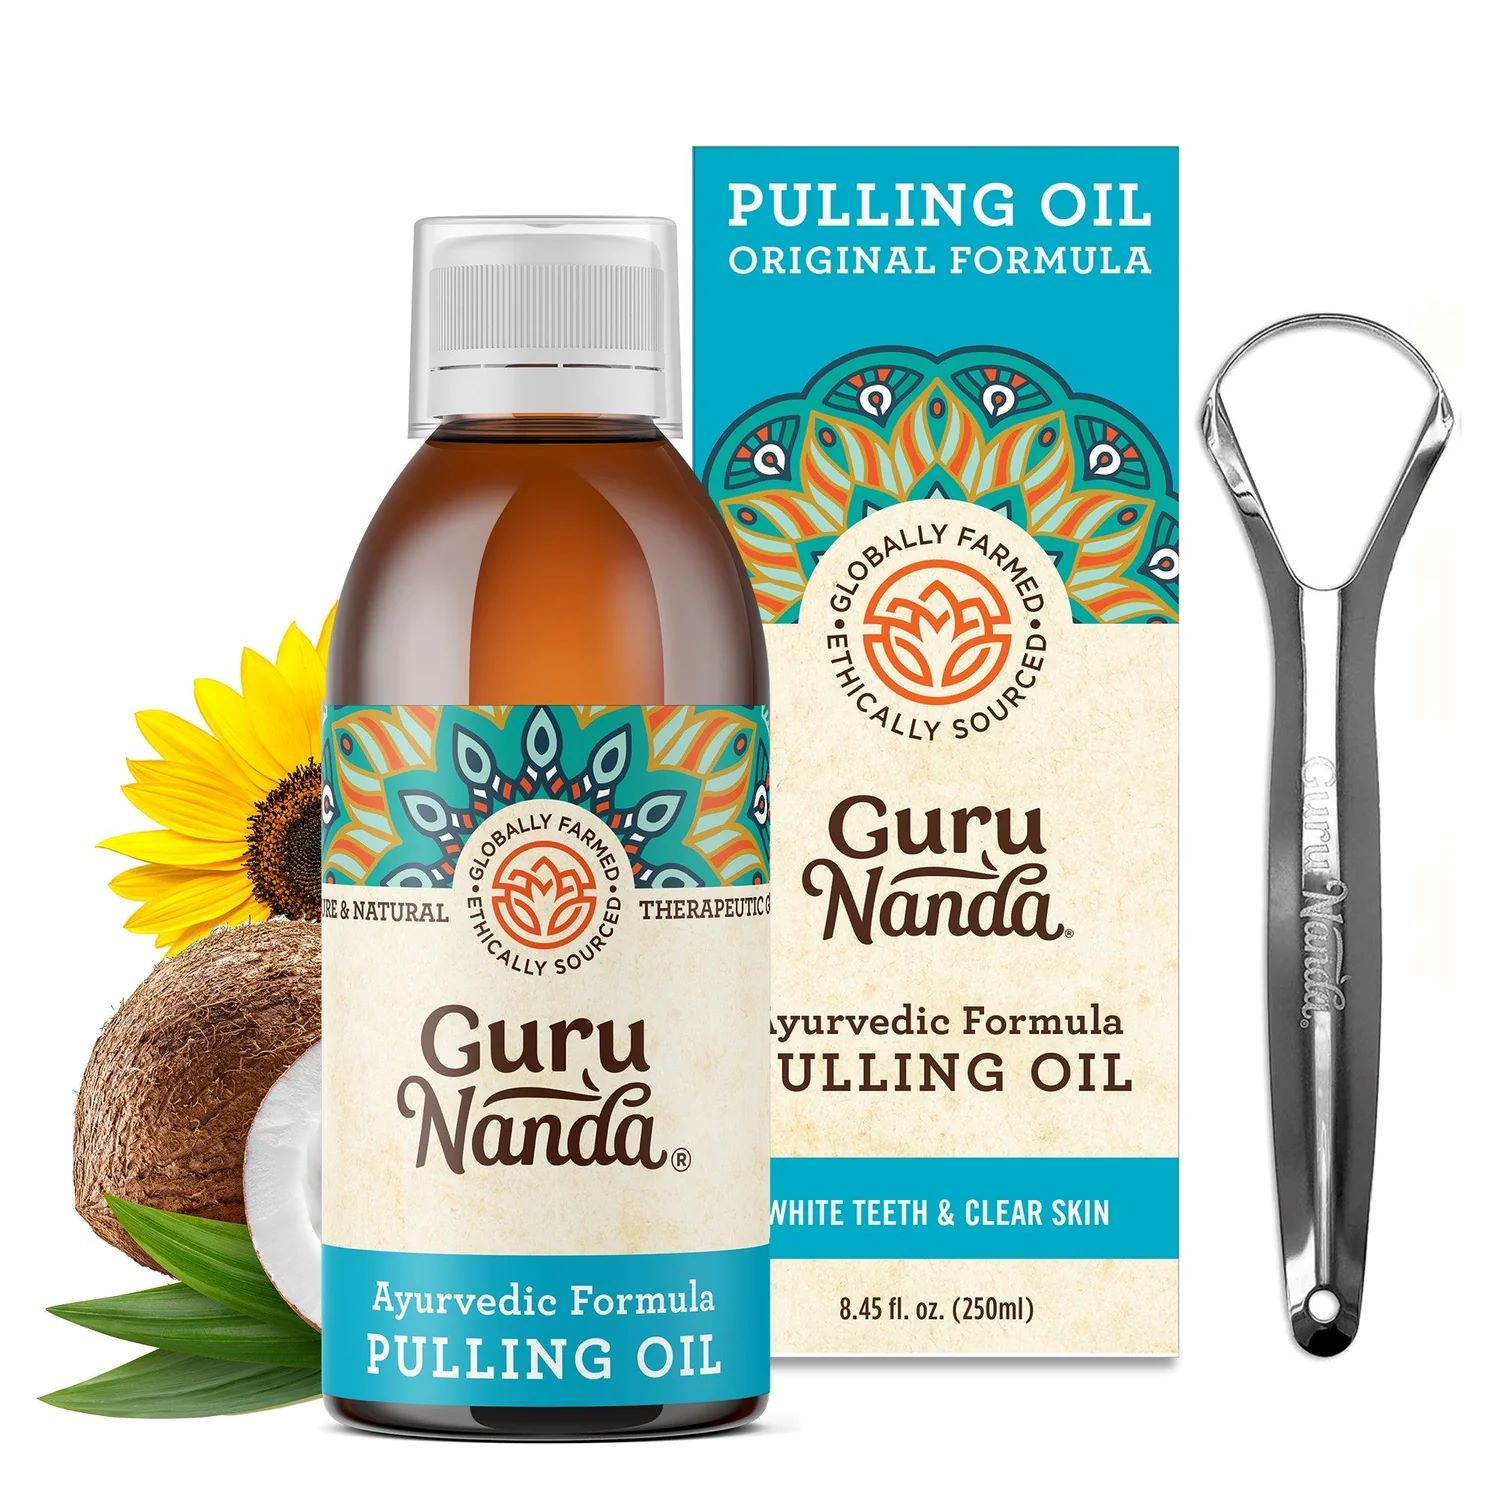 Surprising Side Effect Of Guru Nanda Oil Pulling: Is Swallowing Tea Tree Oil Safe?